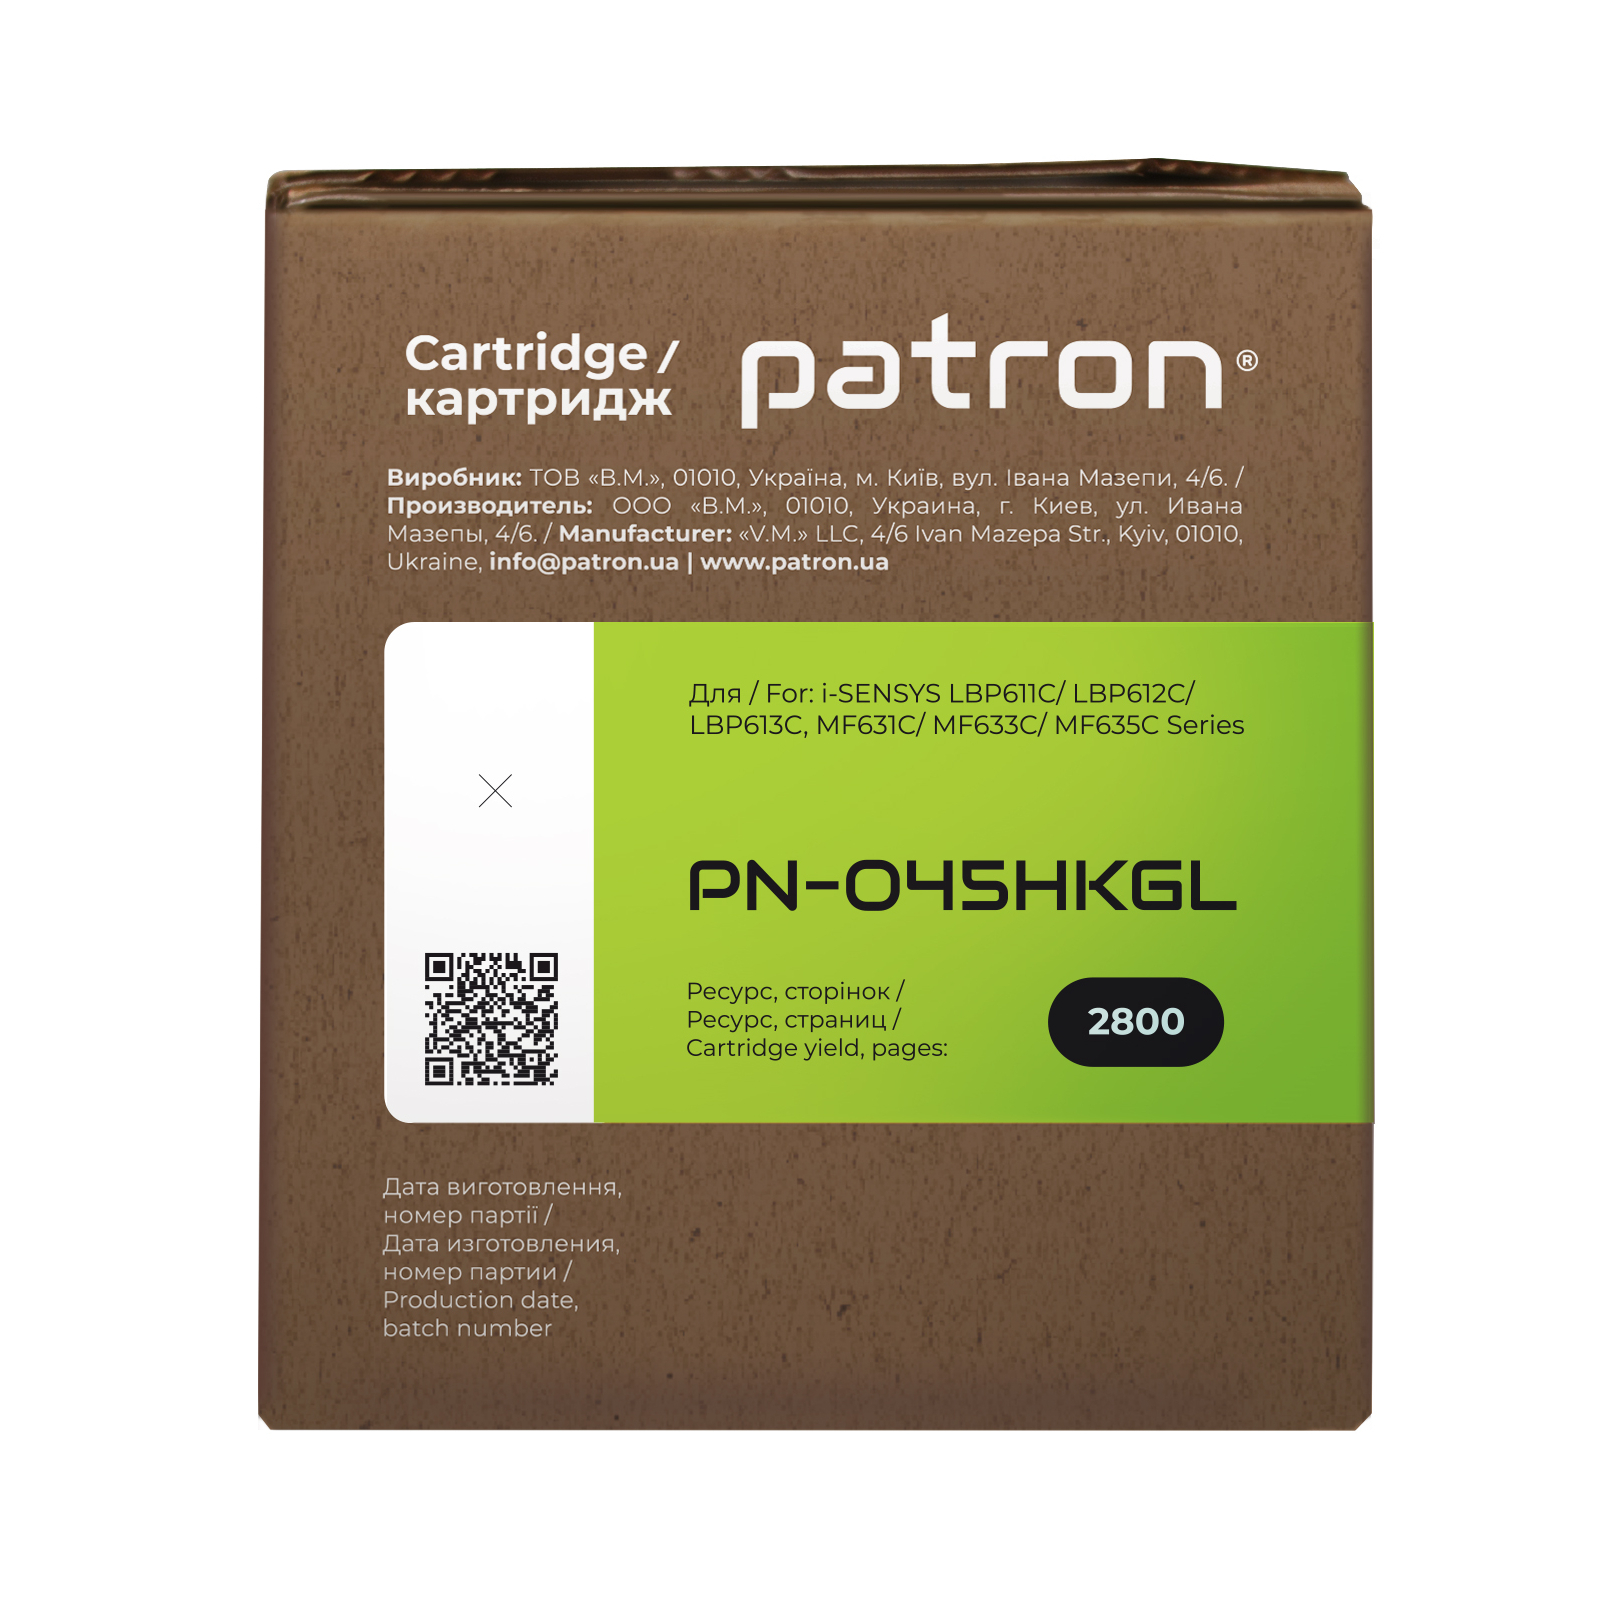 Картридж Patron CANON 045 YELLOW GREEN Label (PN-045YGL) изображение 3